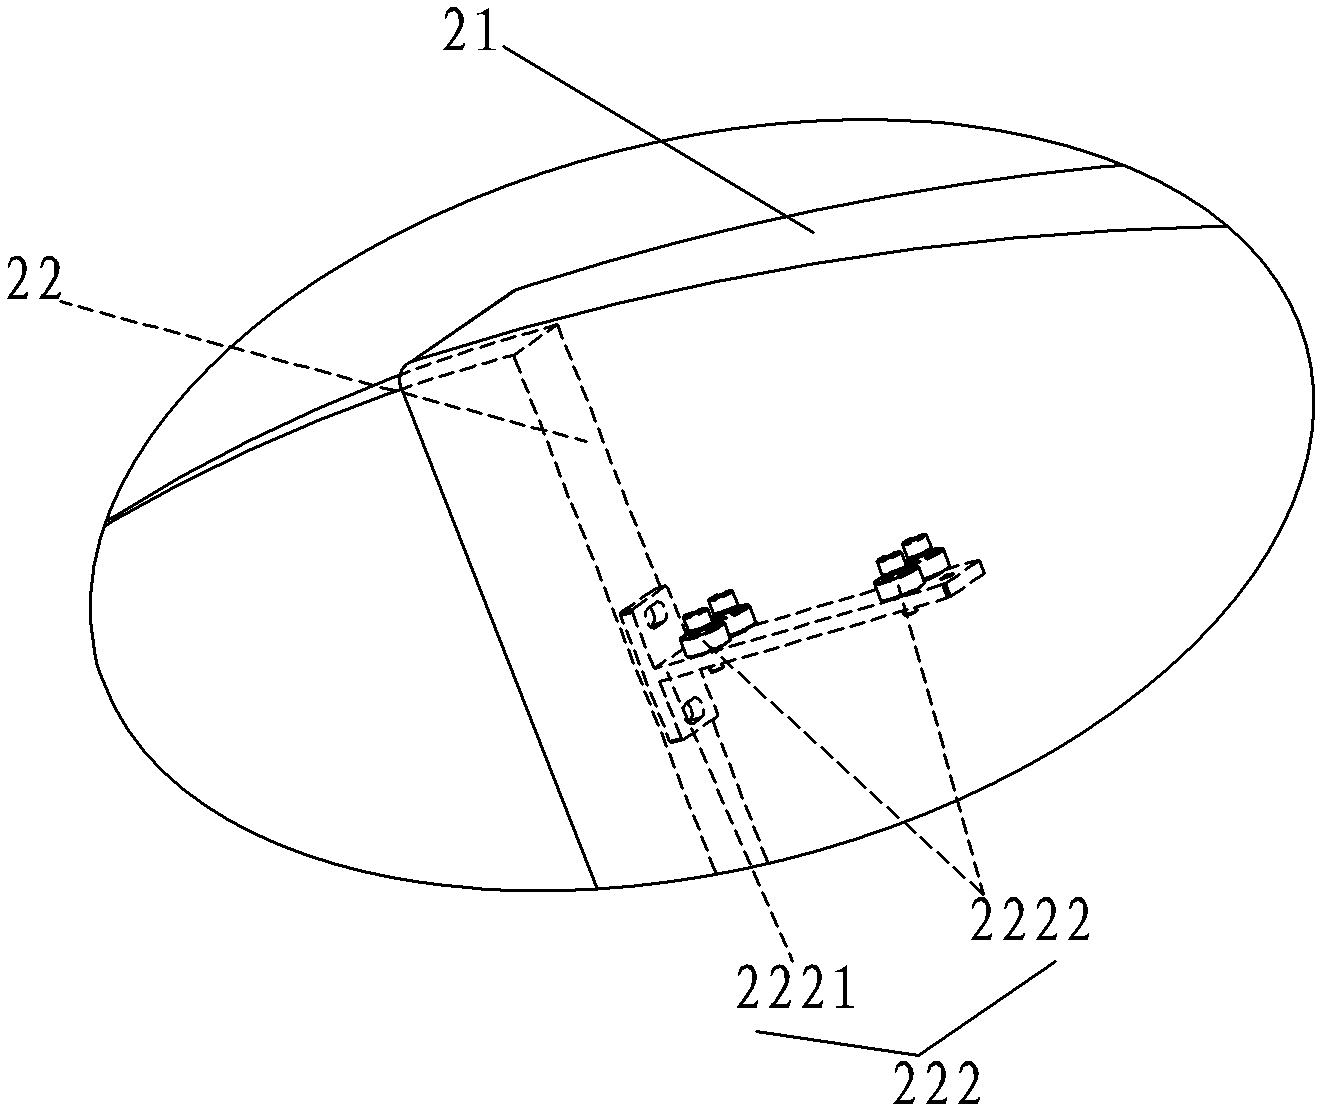 A fan-shaped door mechanism and its application driving mechanism